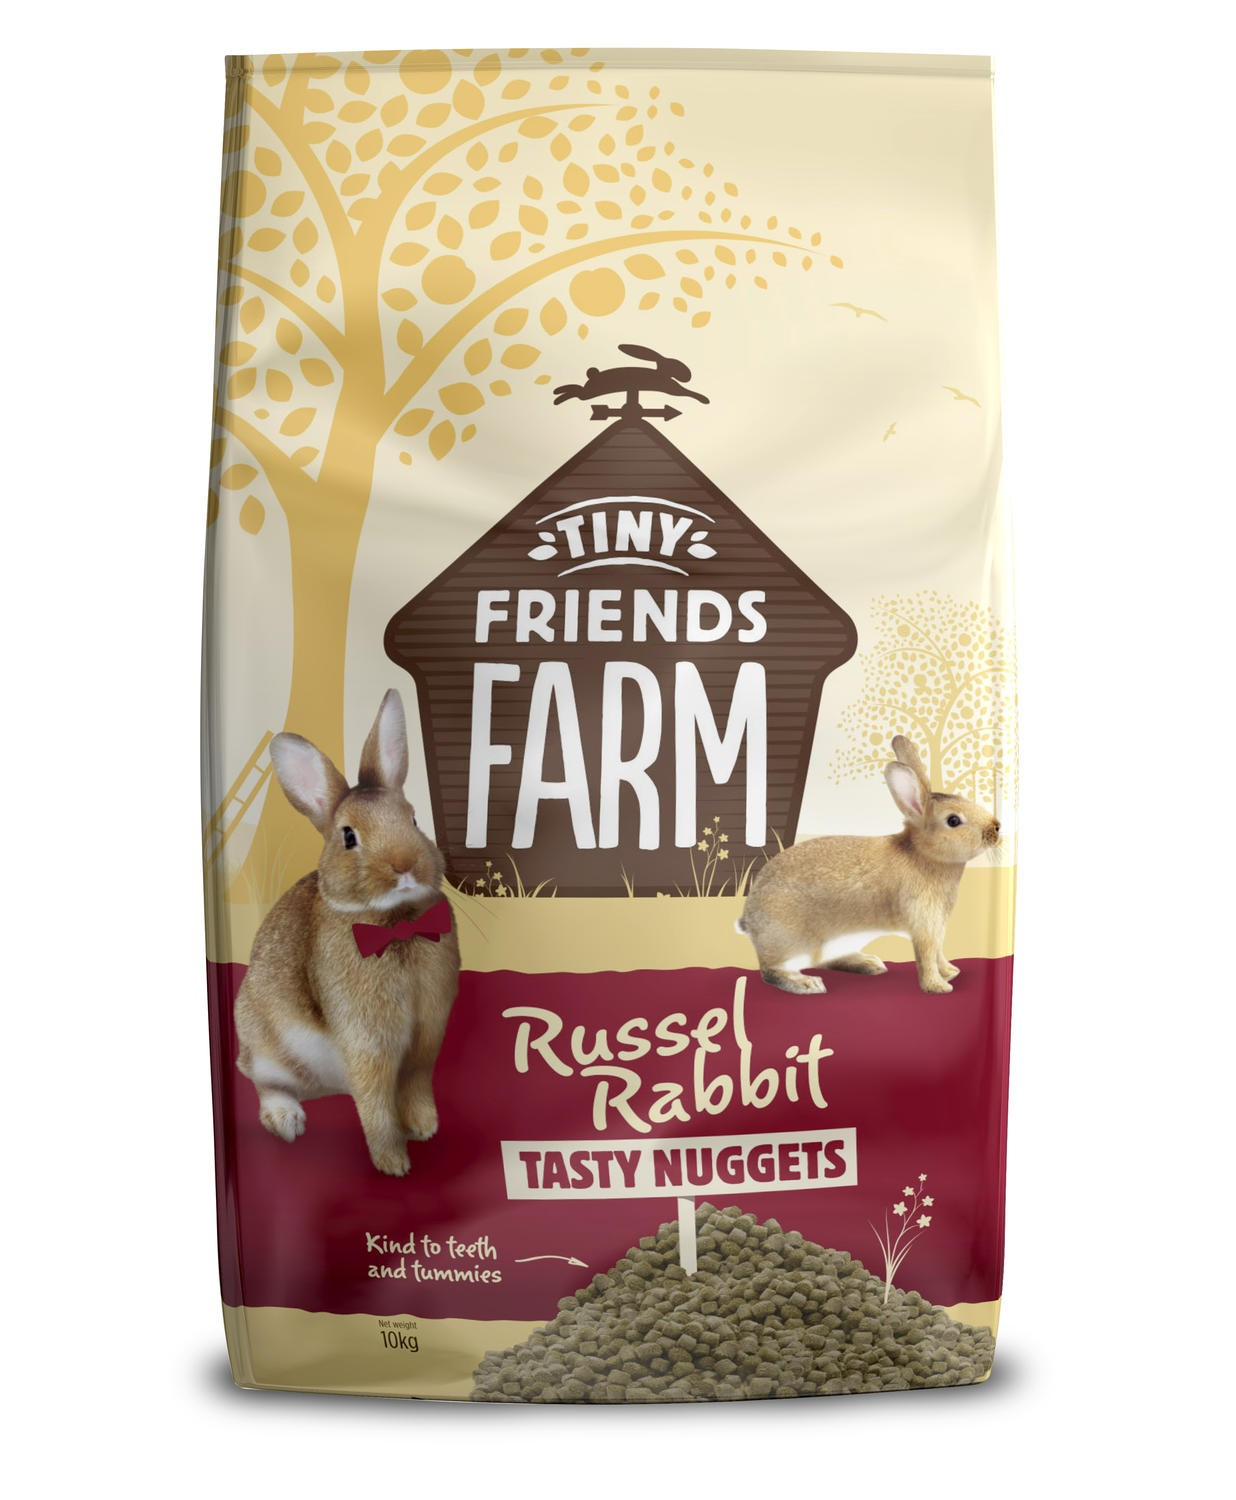 Tiny Friends Farm Russell Rabbit Tasty Nuggets lapin 